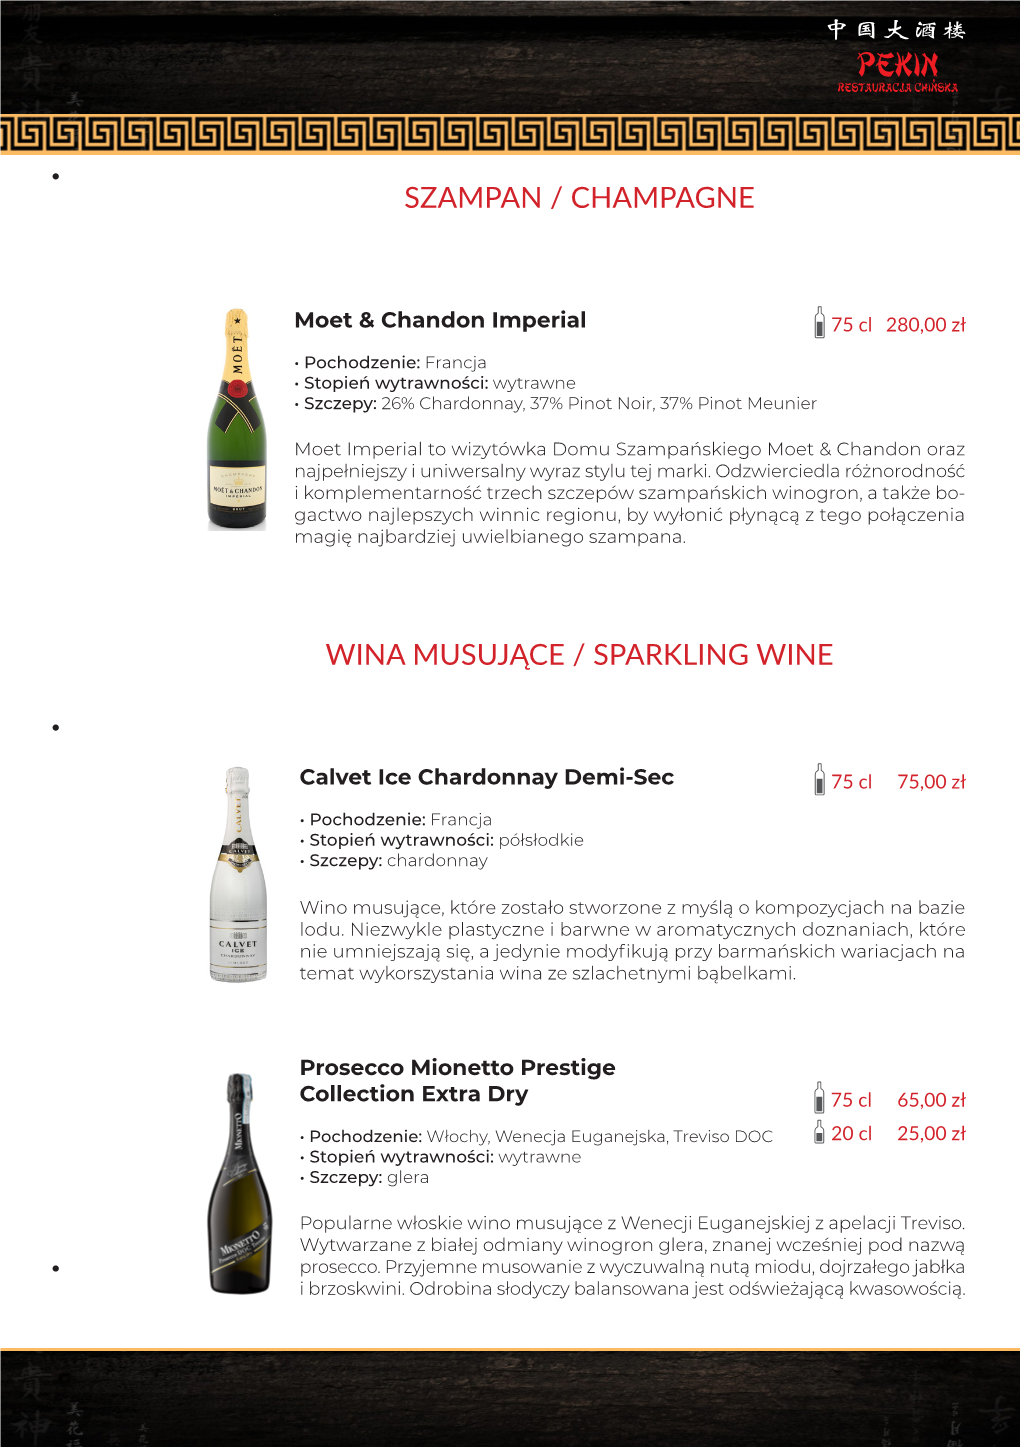 Szampan / Champagne Wina Musujące / Sparkling Wine